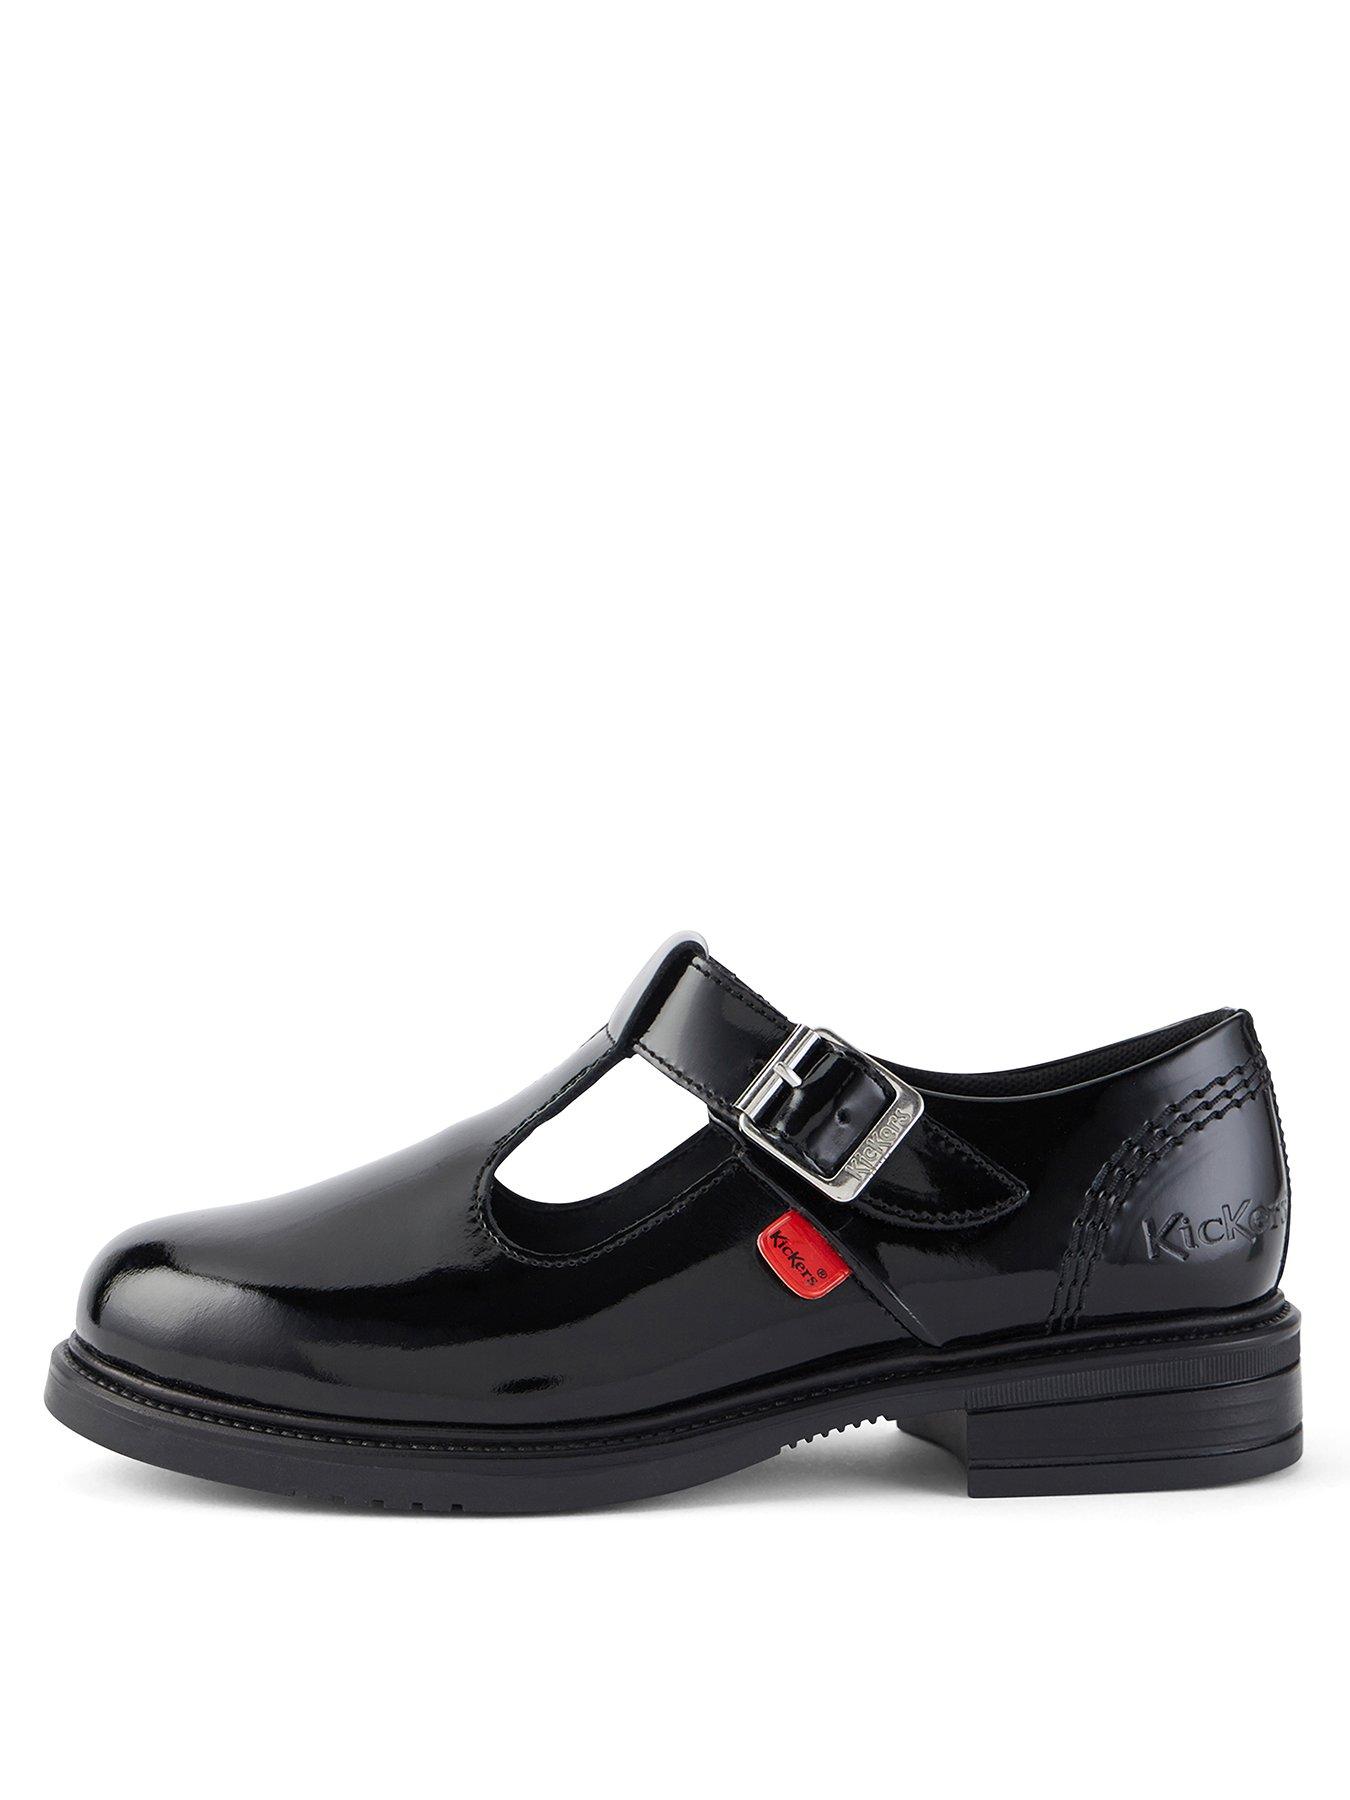 Kickers Kick Hi Patent School Shoes - Black